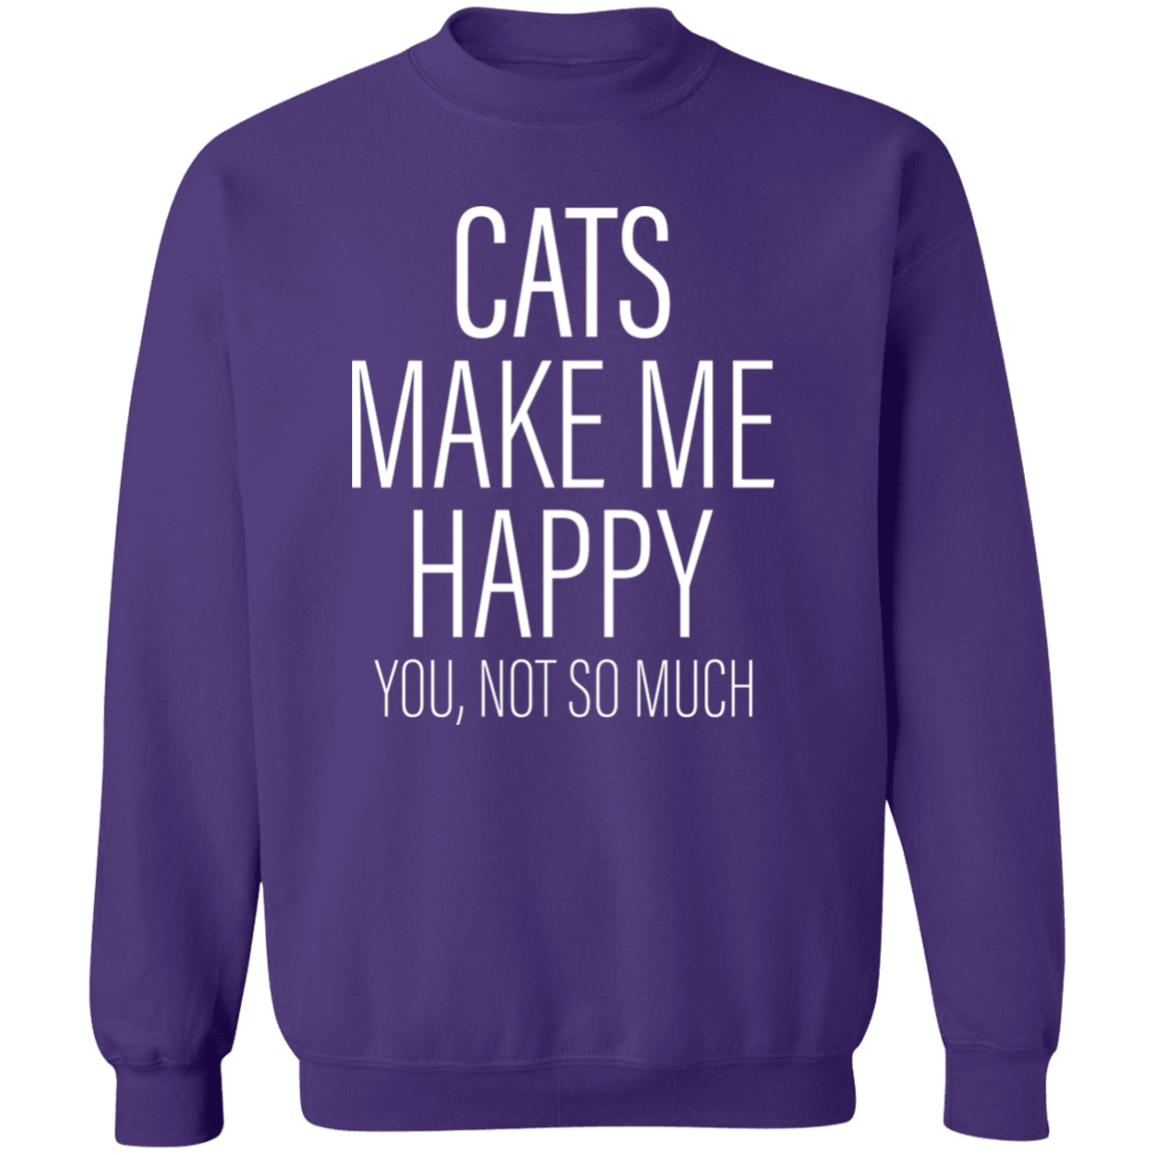 Cats Make Me Happy - Sweatshirt.